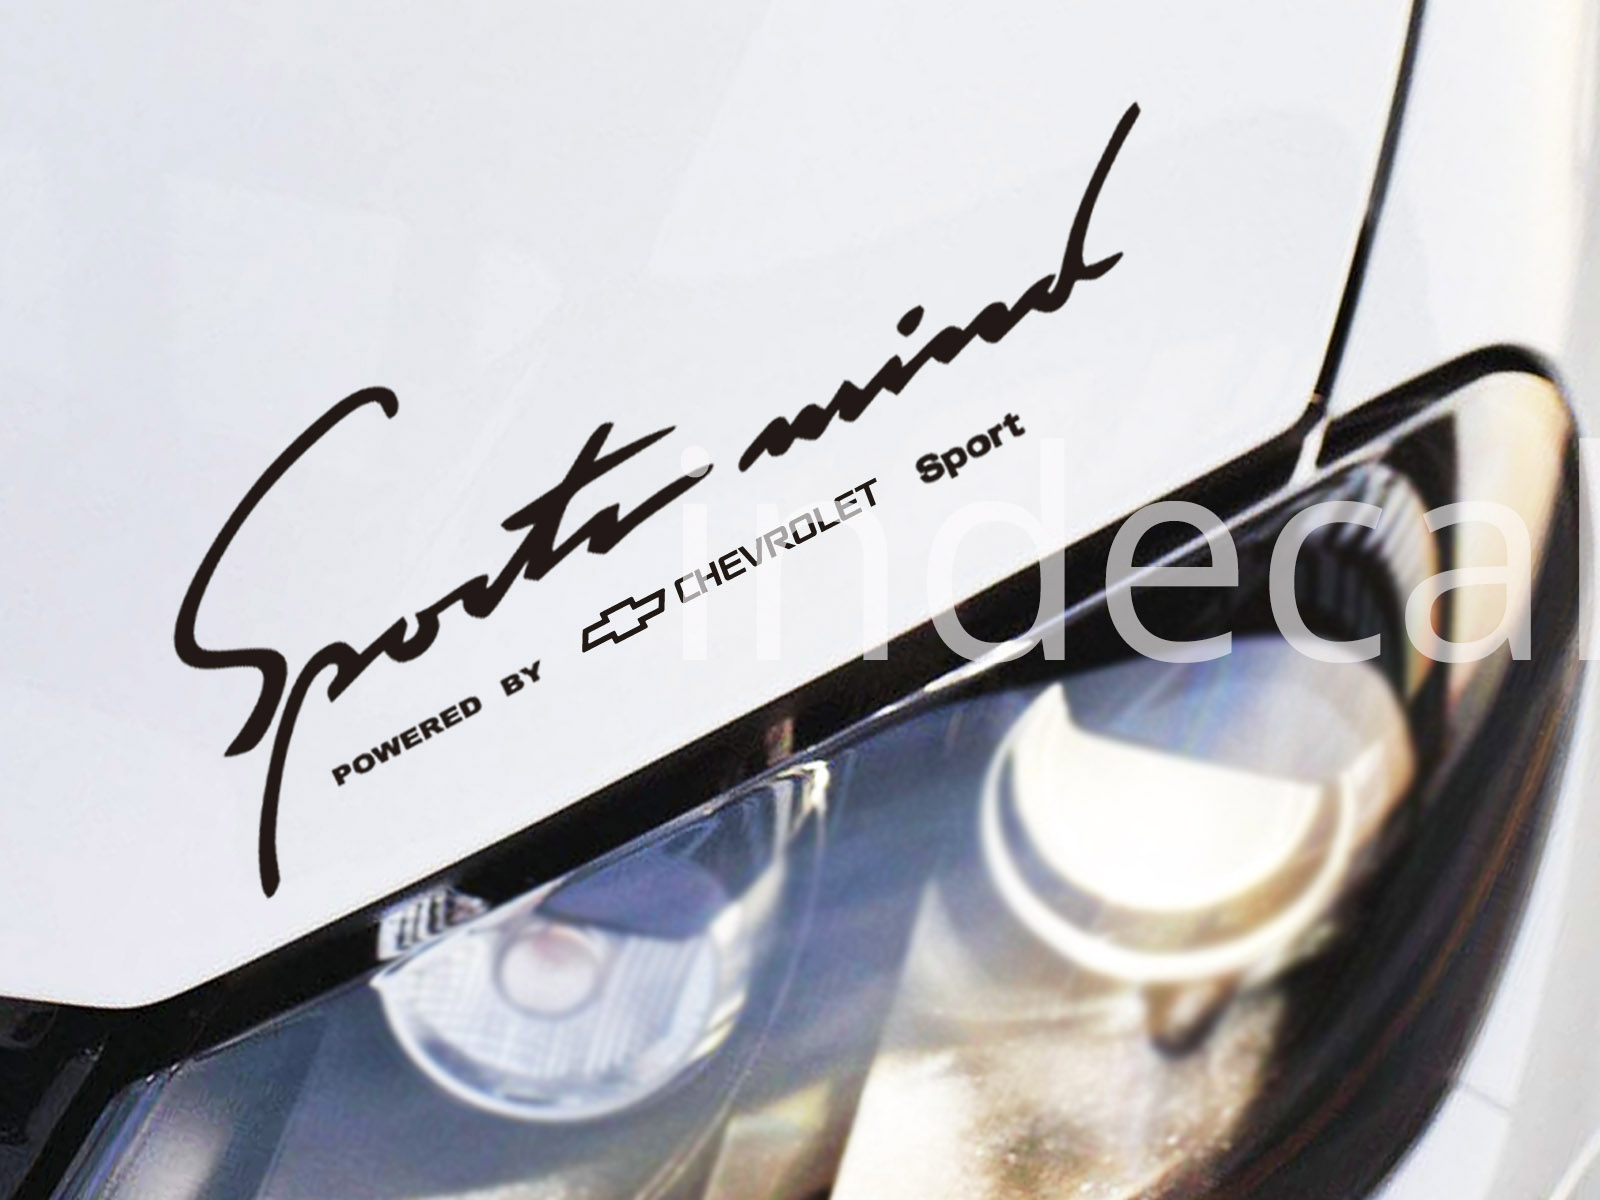 1 x Chevrolet Sports Mind Sticker - Black